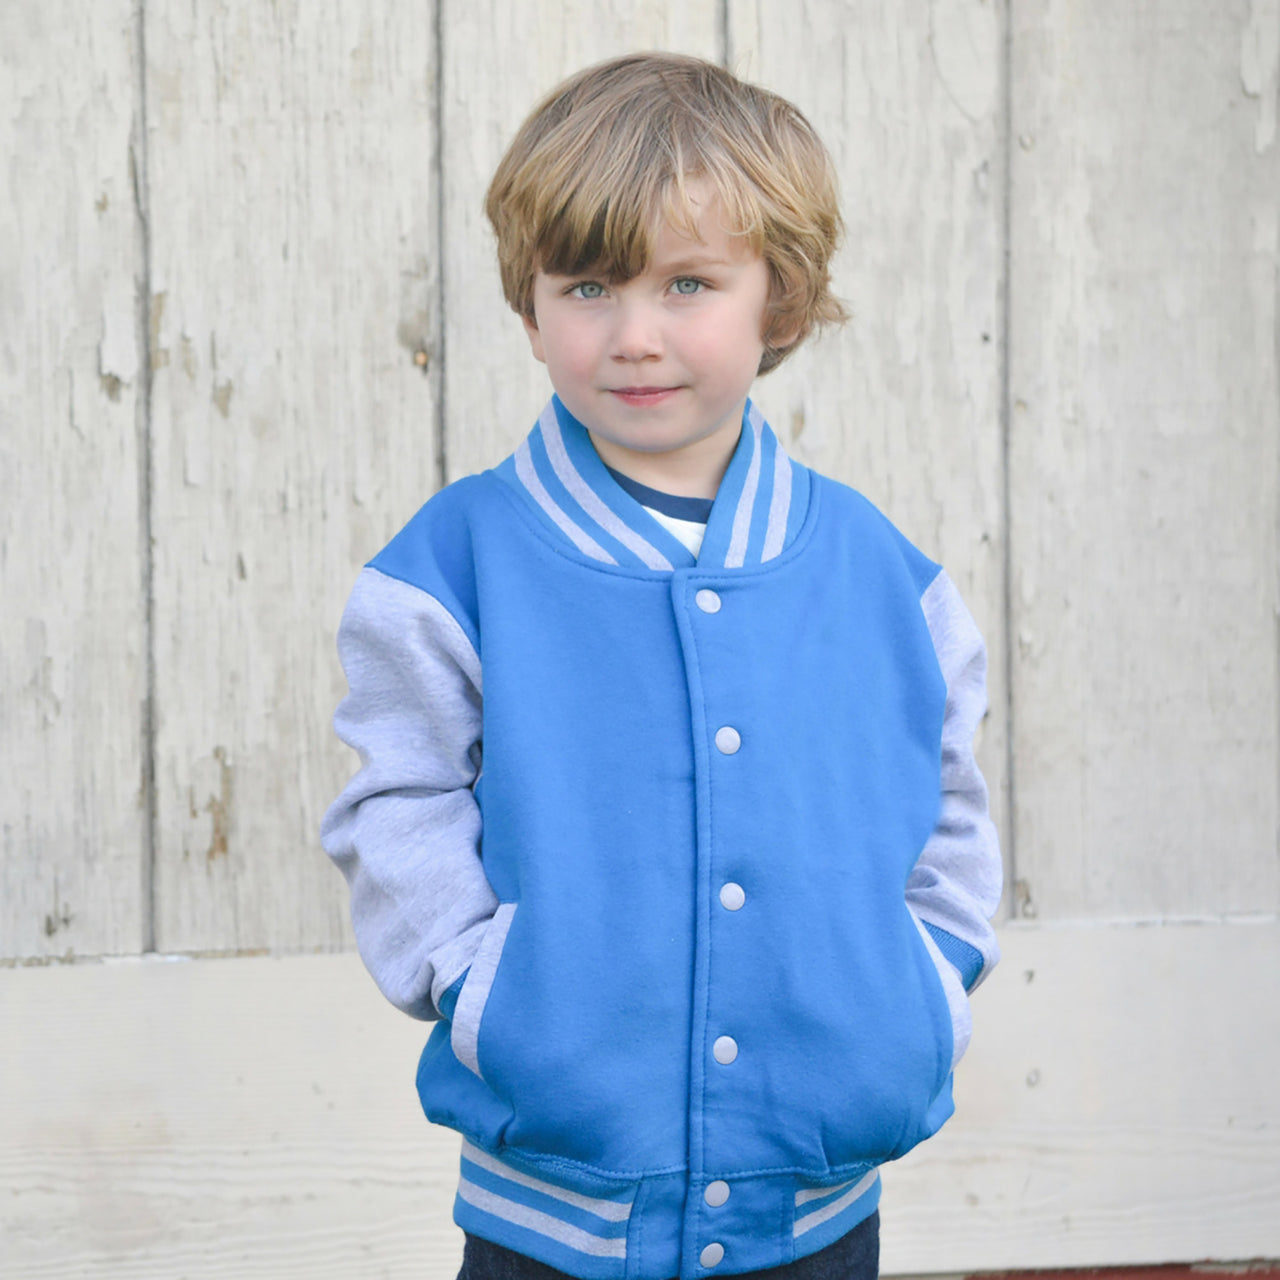 Kids Sweatshirt Varsity Jacket SKY BLUE/GREY MARL